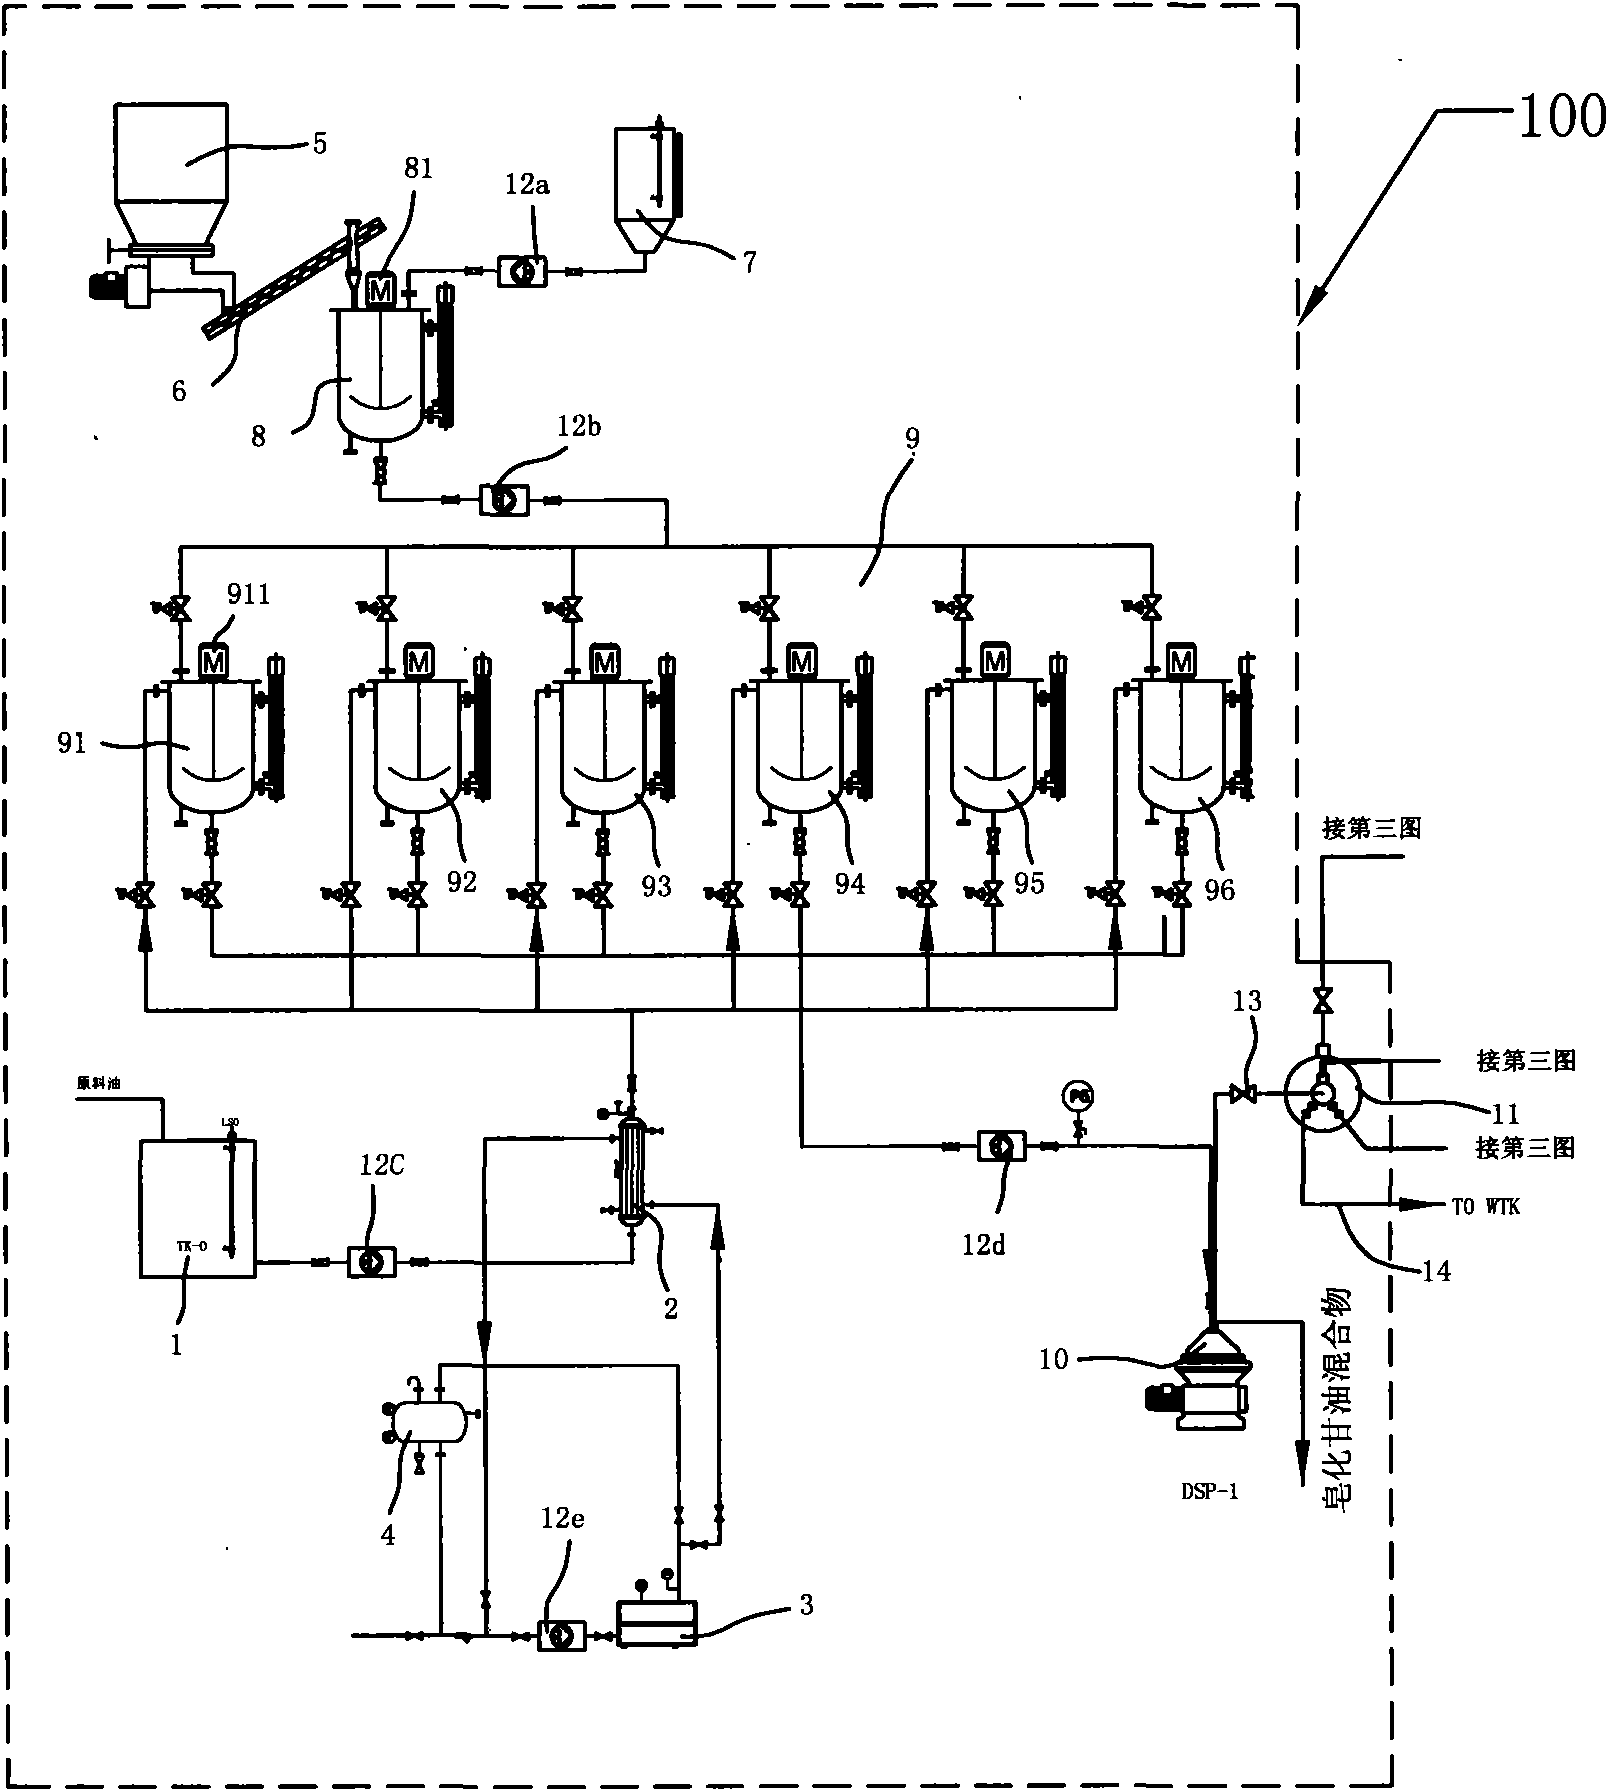 Method for refining biodiesel